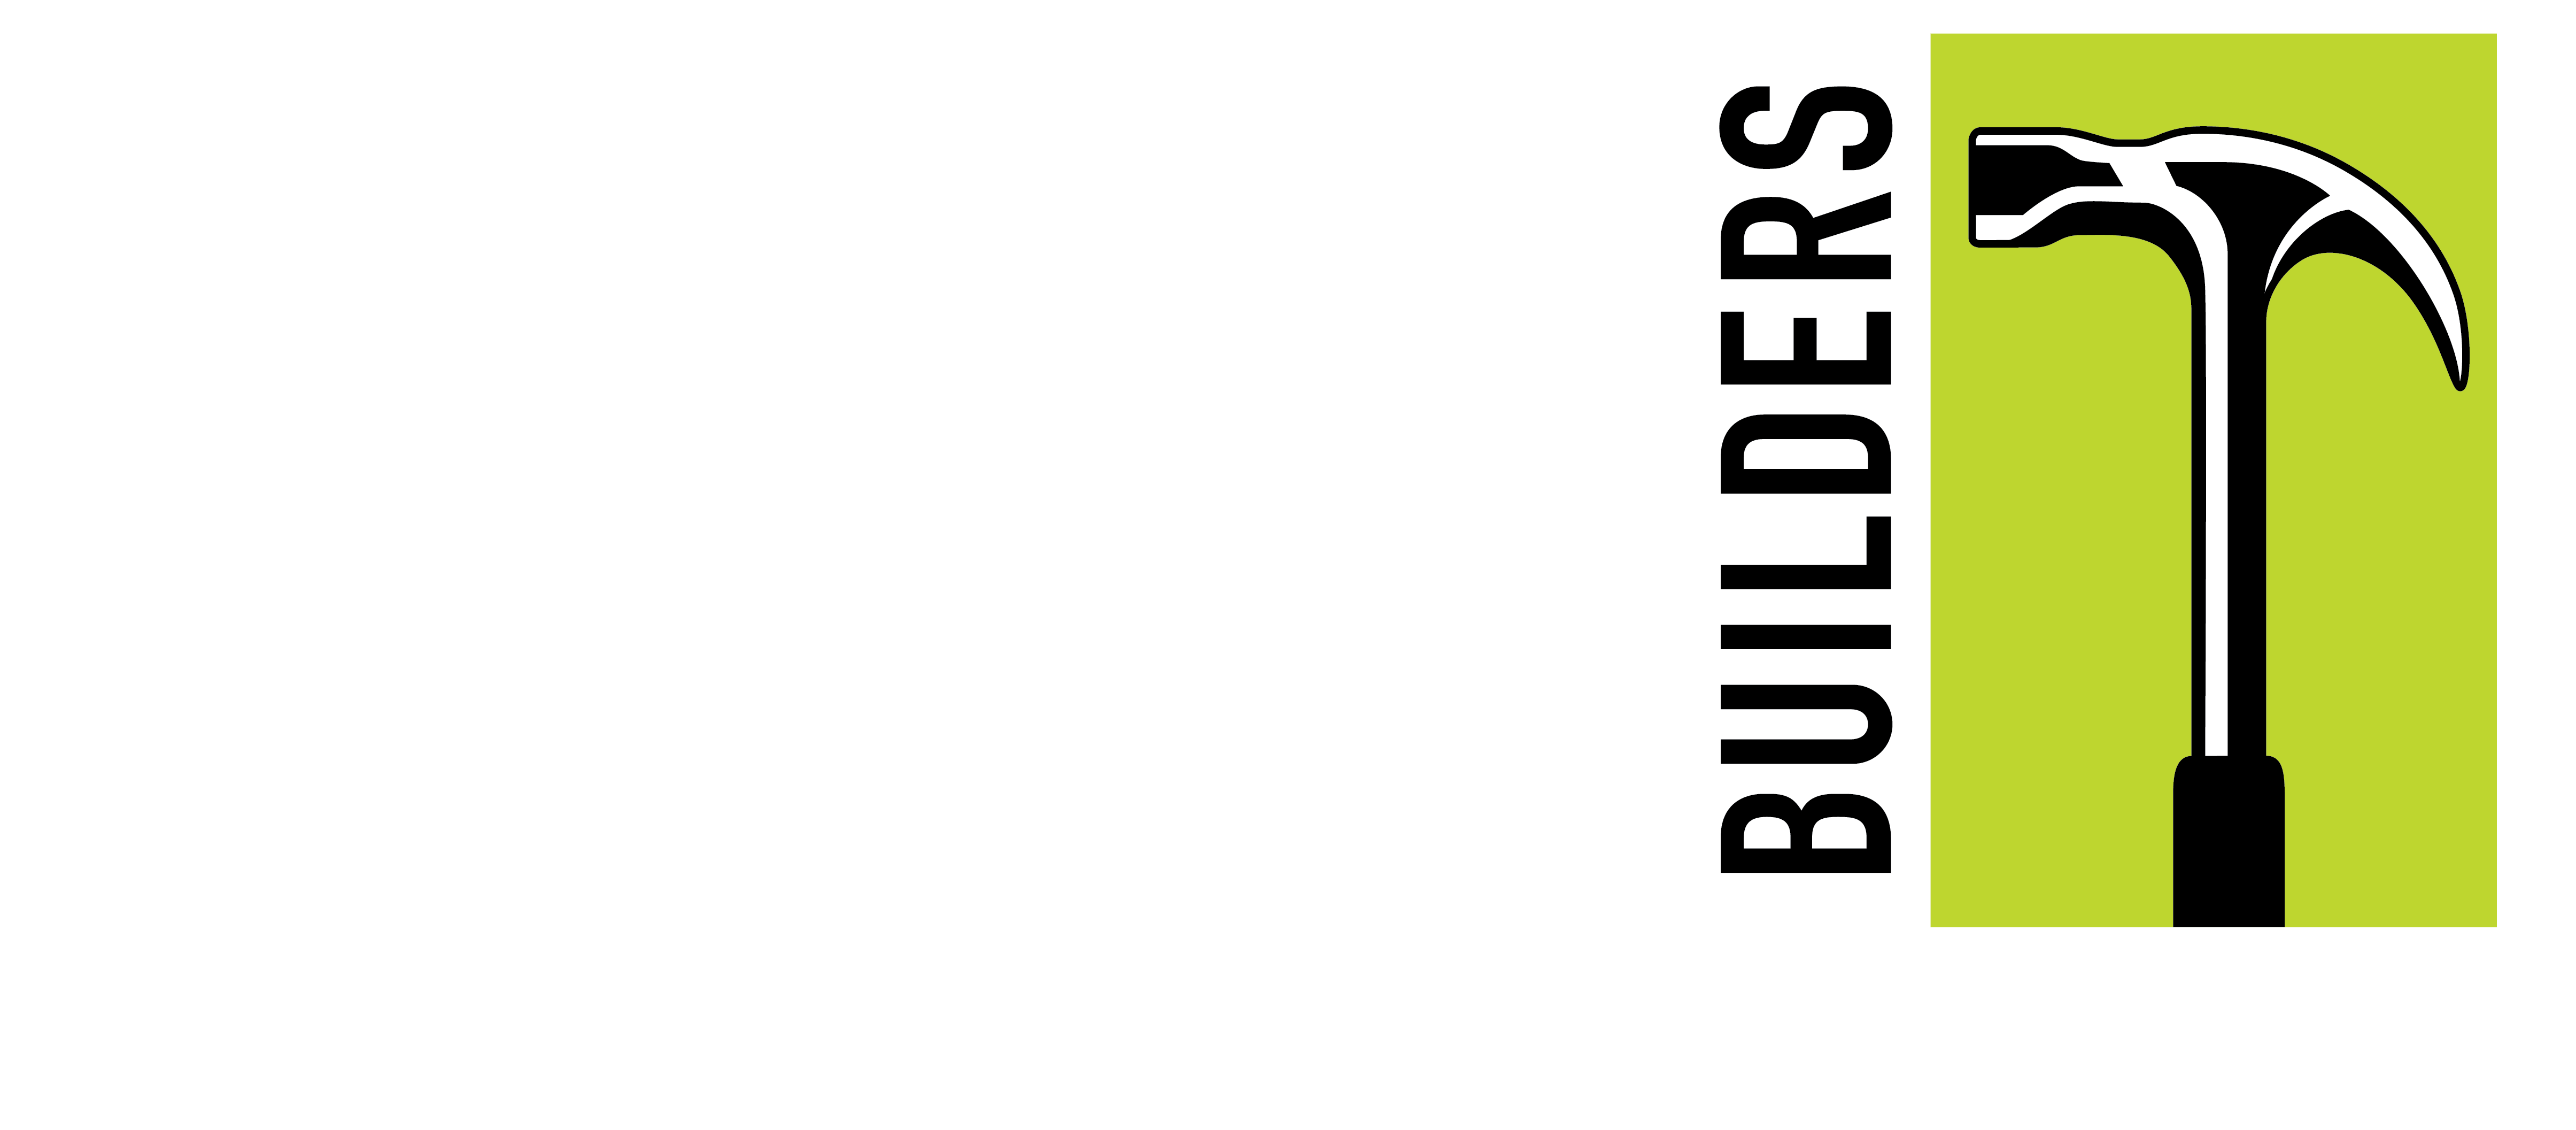 JPW Builders Your Local Master Tradesman